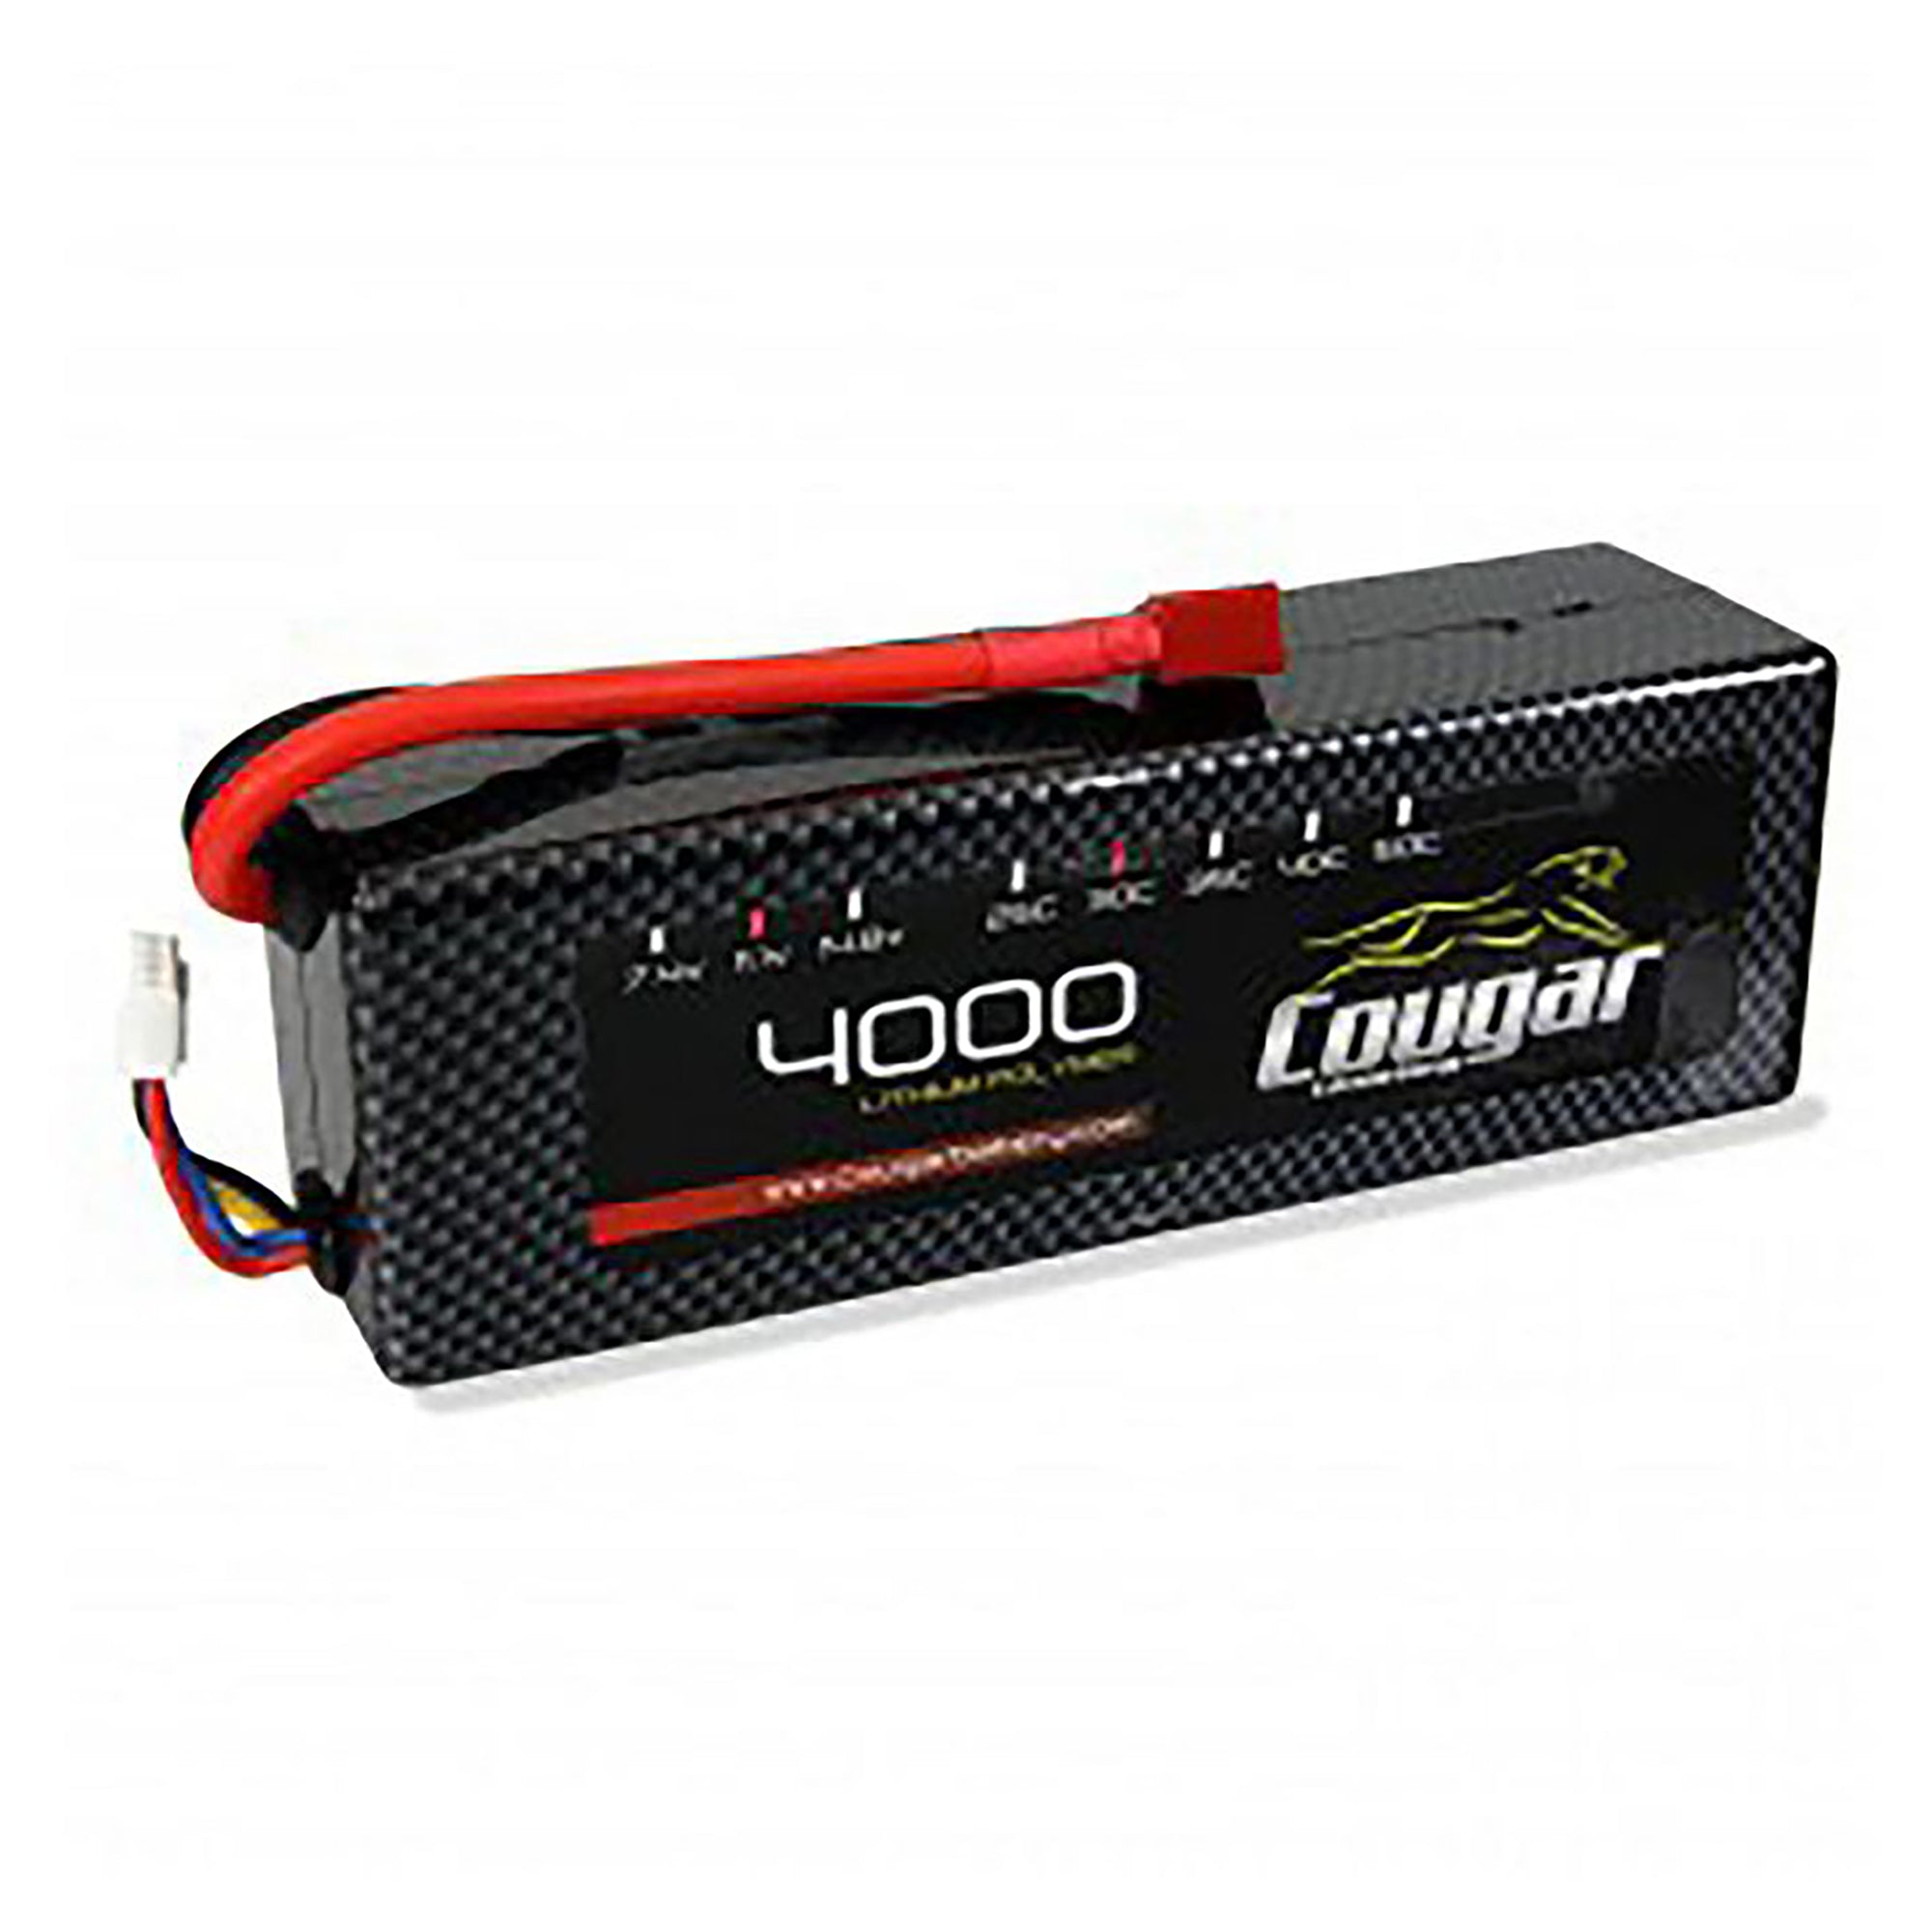 Cougar 4000mAh 11.1v 3S 30C Hard Case LiPo Battery